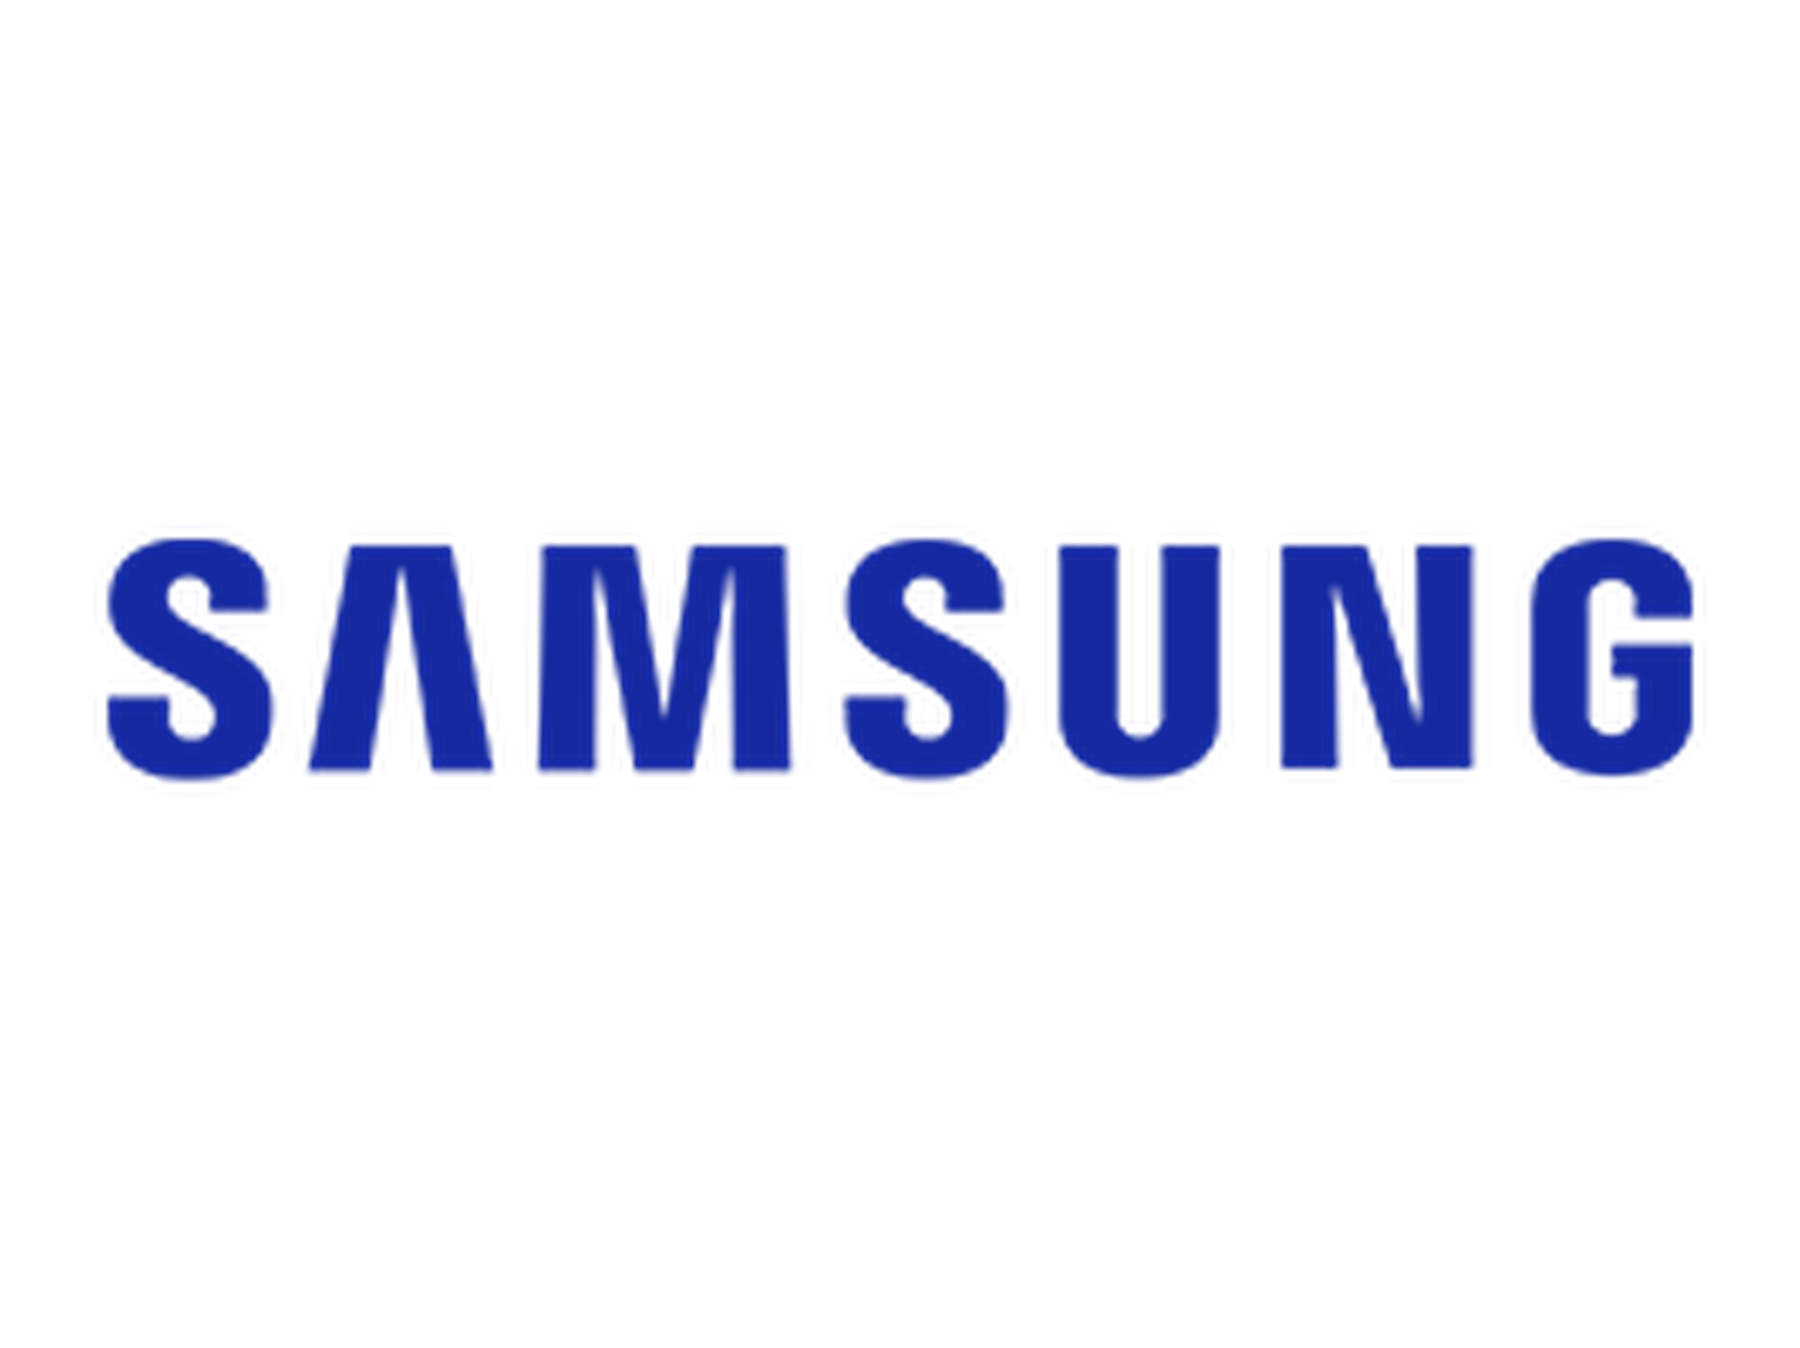 Samsung Promo Code